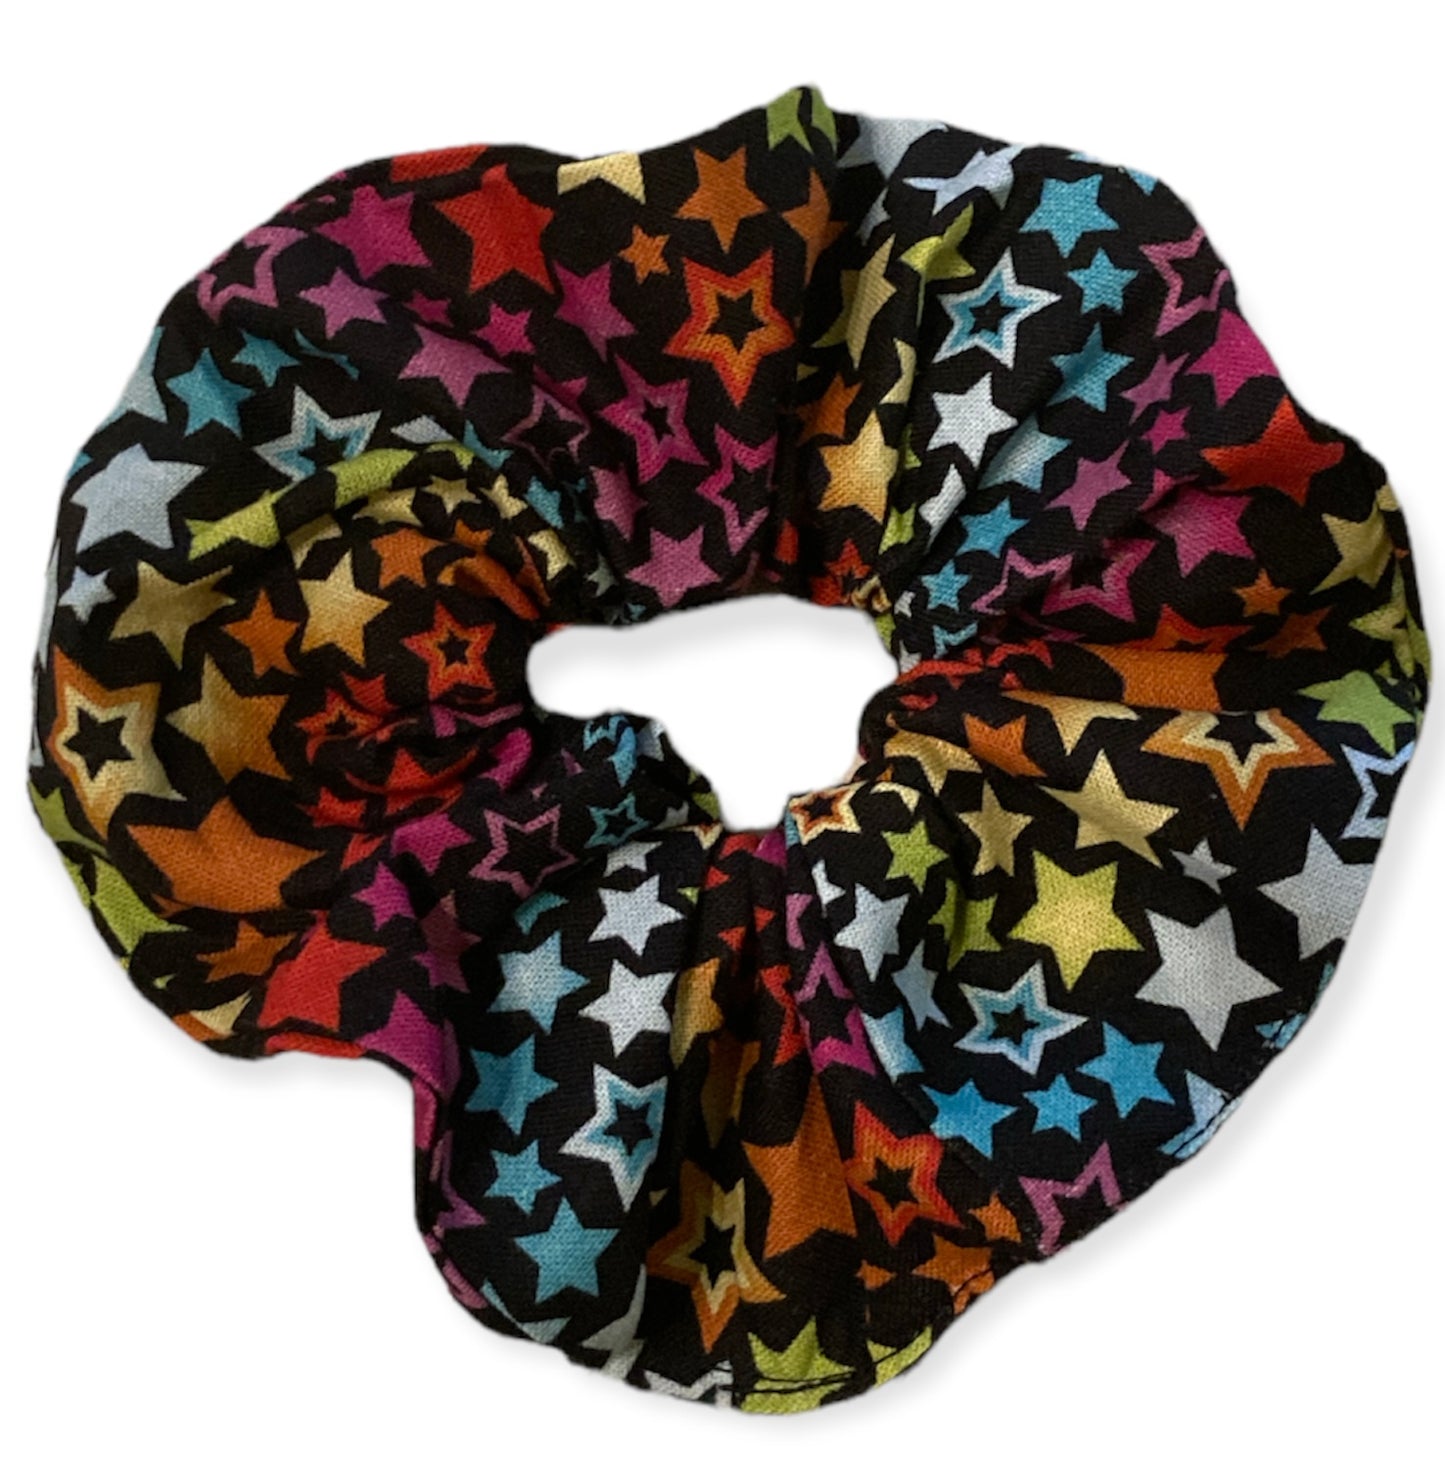 Rainbow star scrunchies